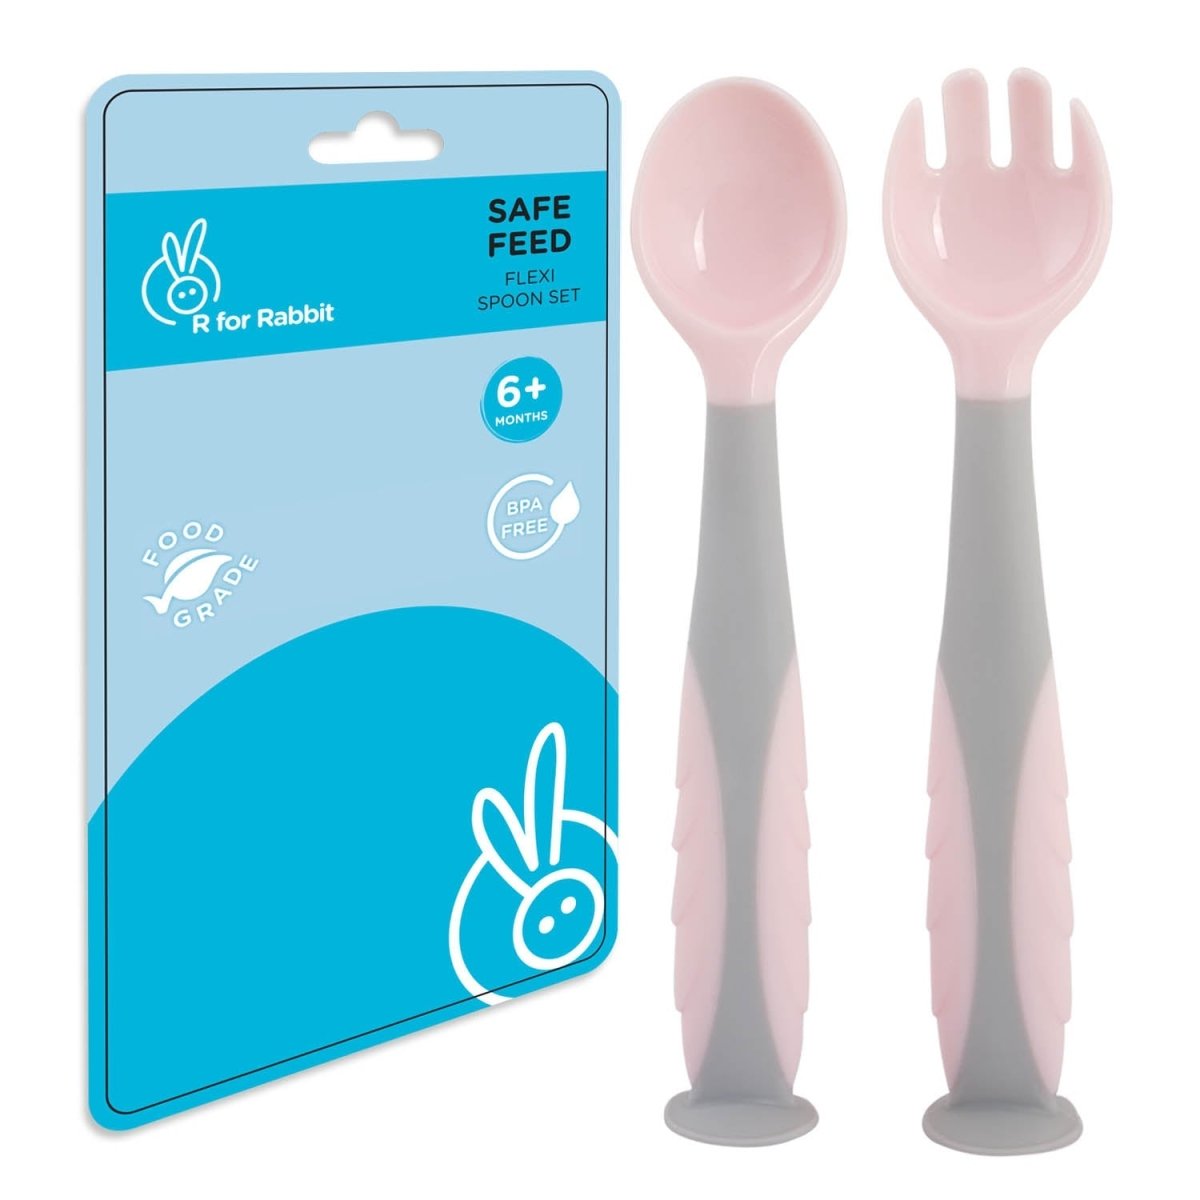 R for Rabbit Safe Feed Flexi Spoon Set- Pink Grey - SFFSPG1